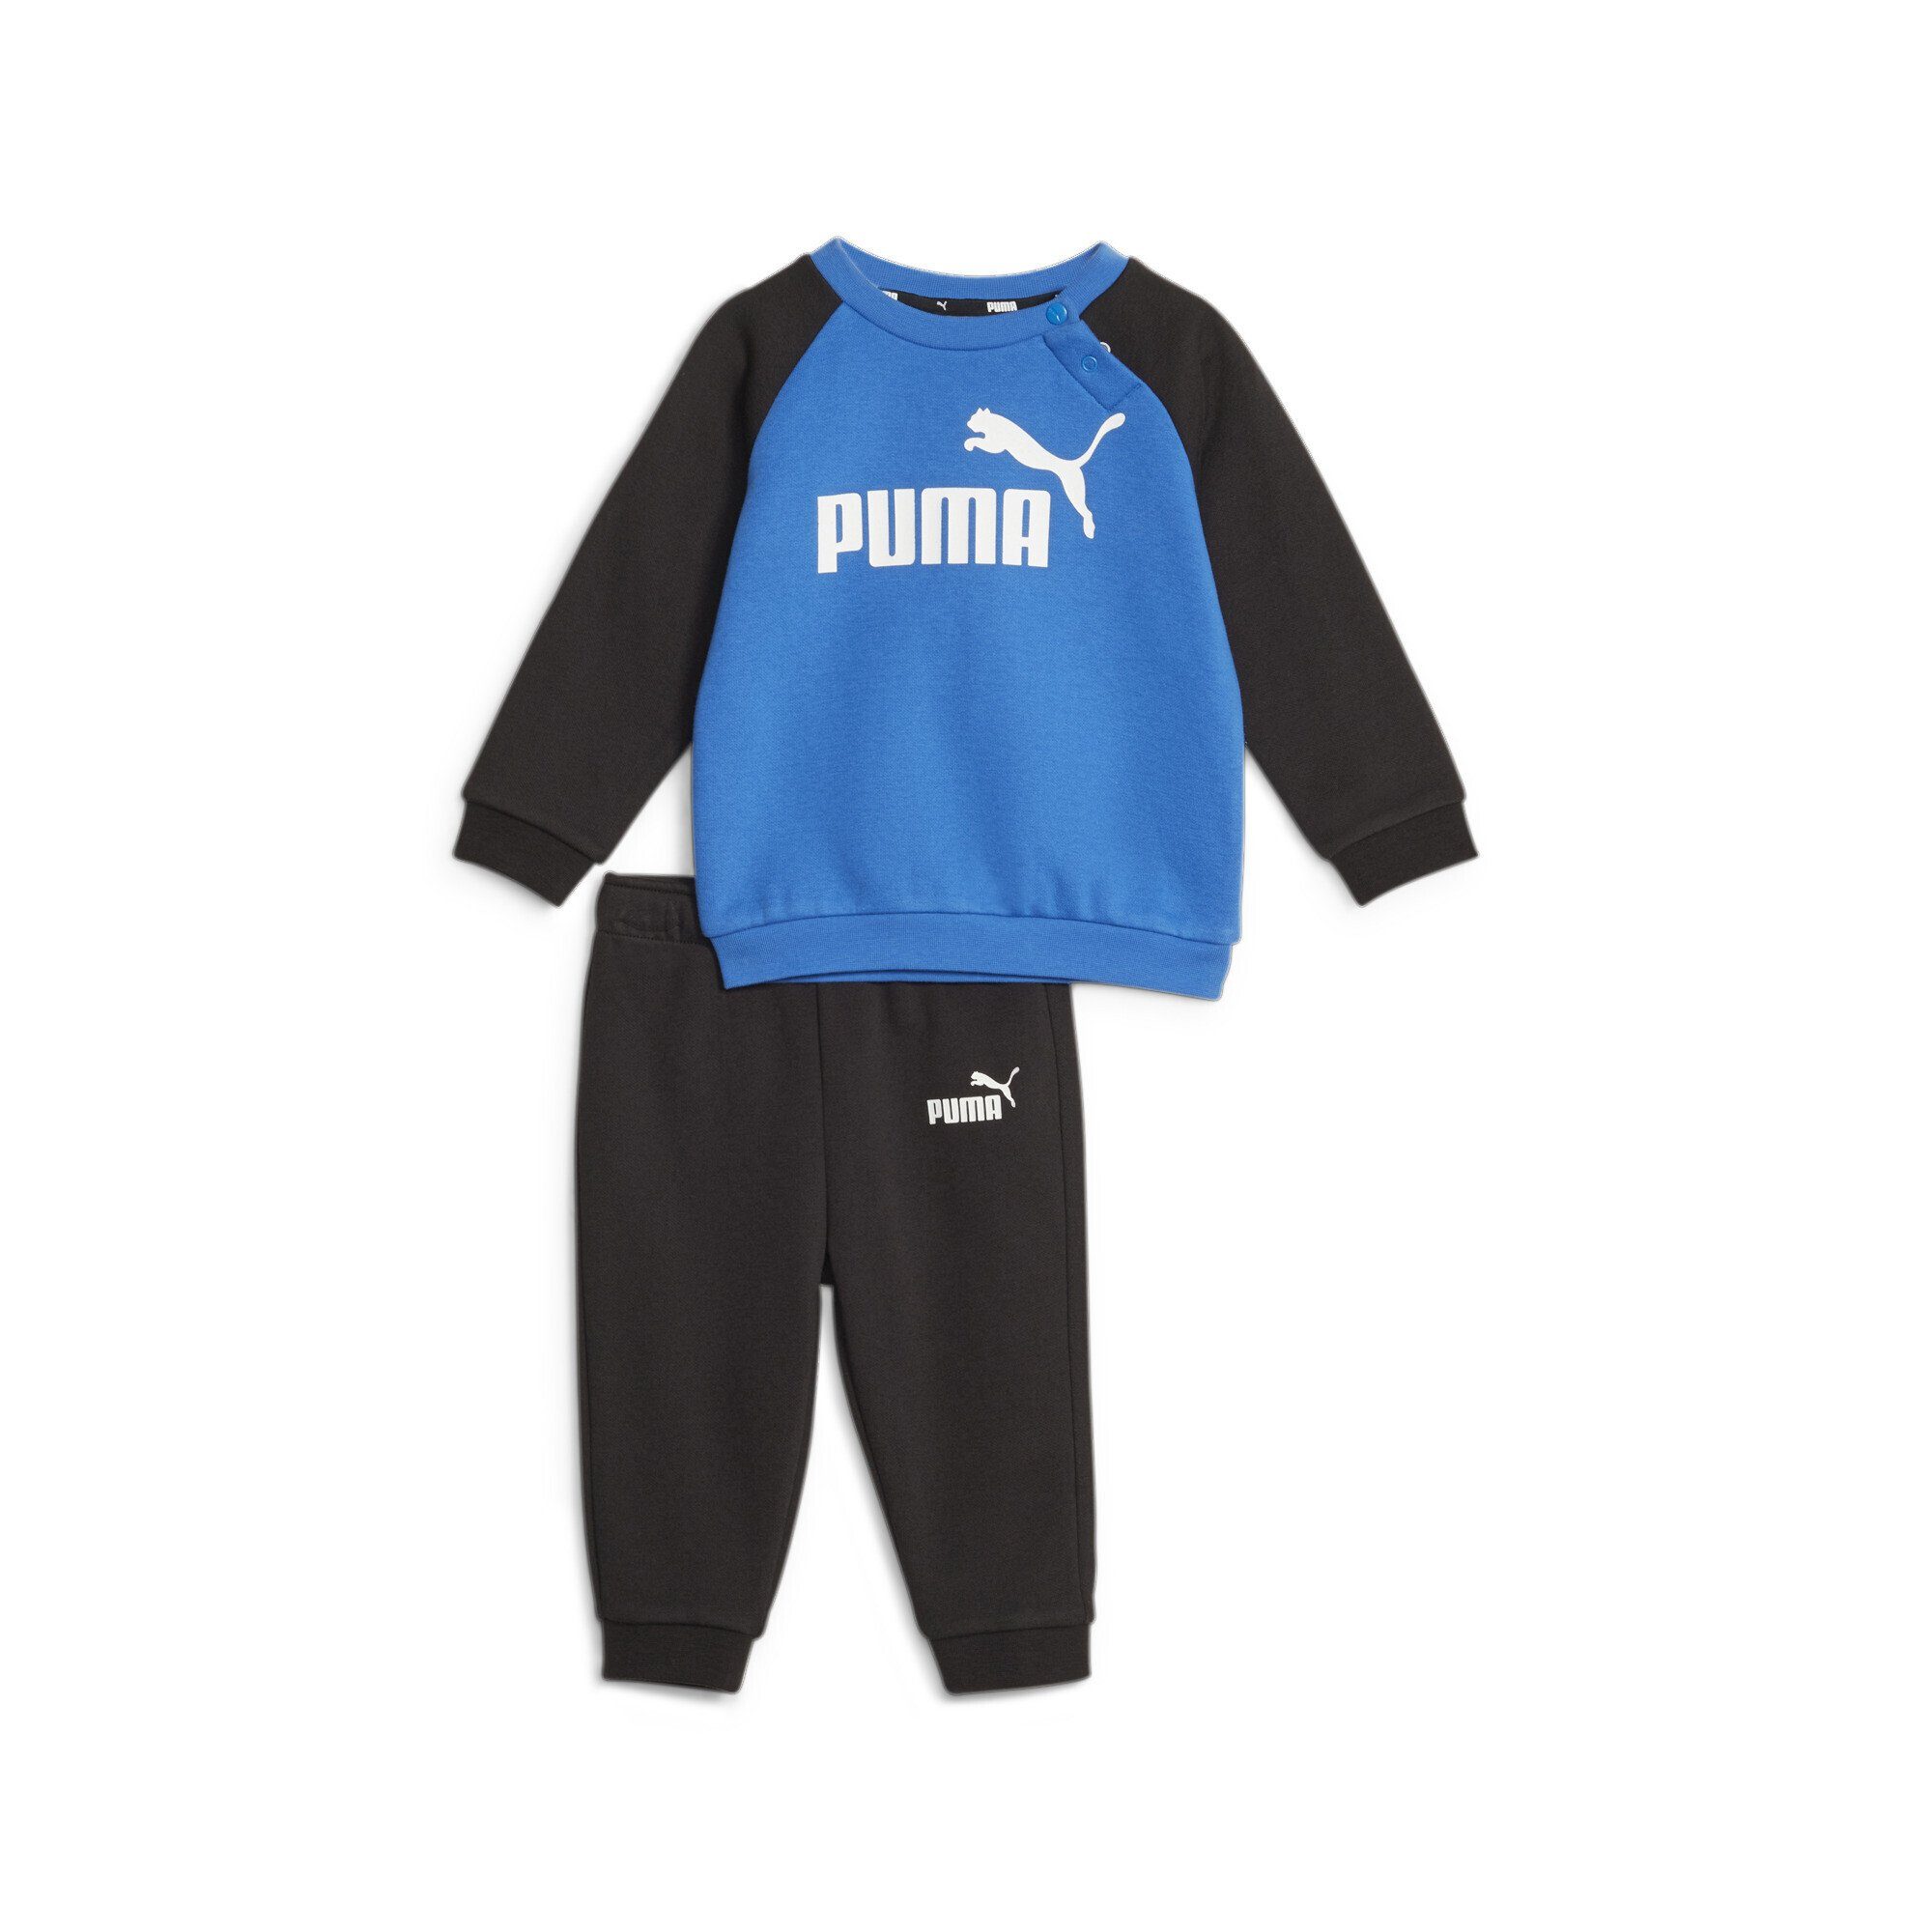 PUMA Jogginganzug Minicats mit Blue Racing Joggingset Raglanärmeln Essentials Kinder